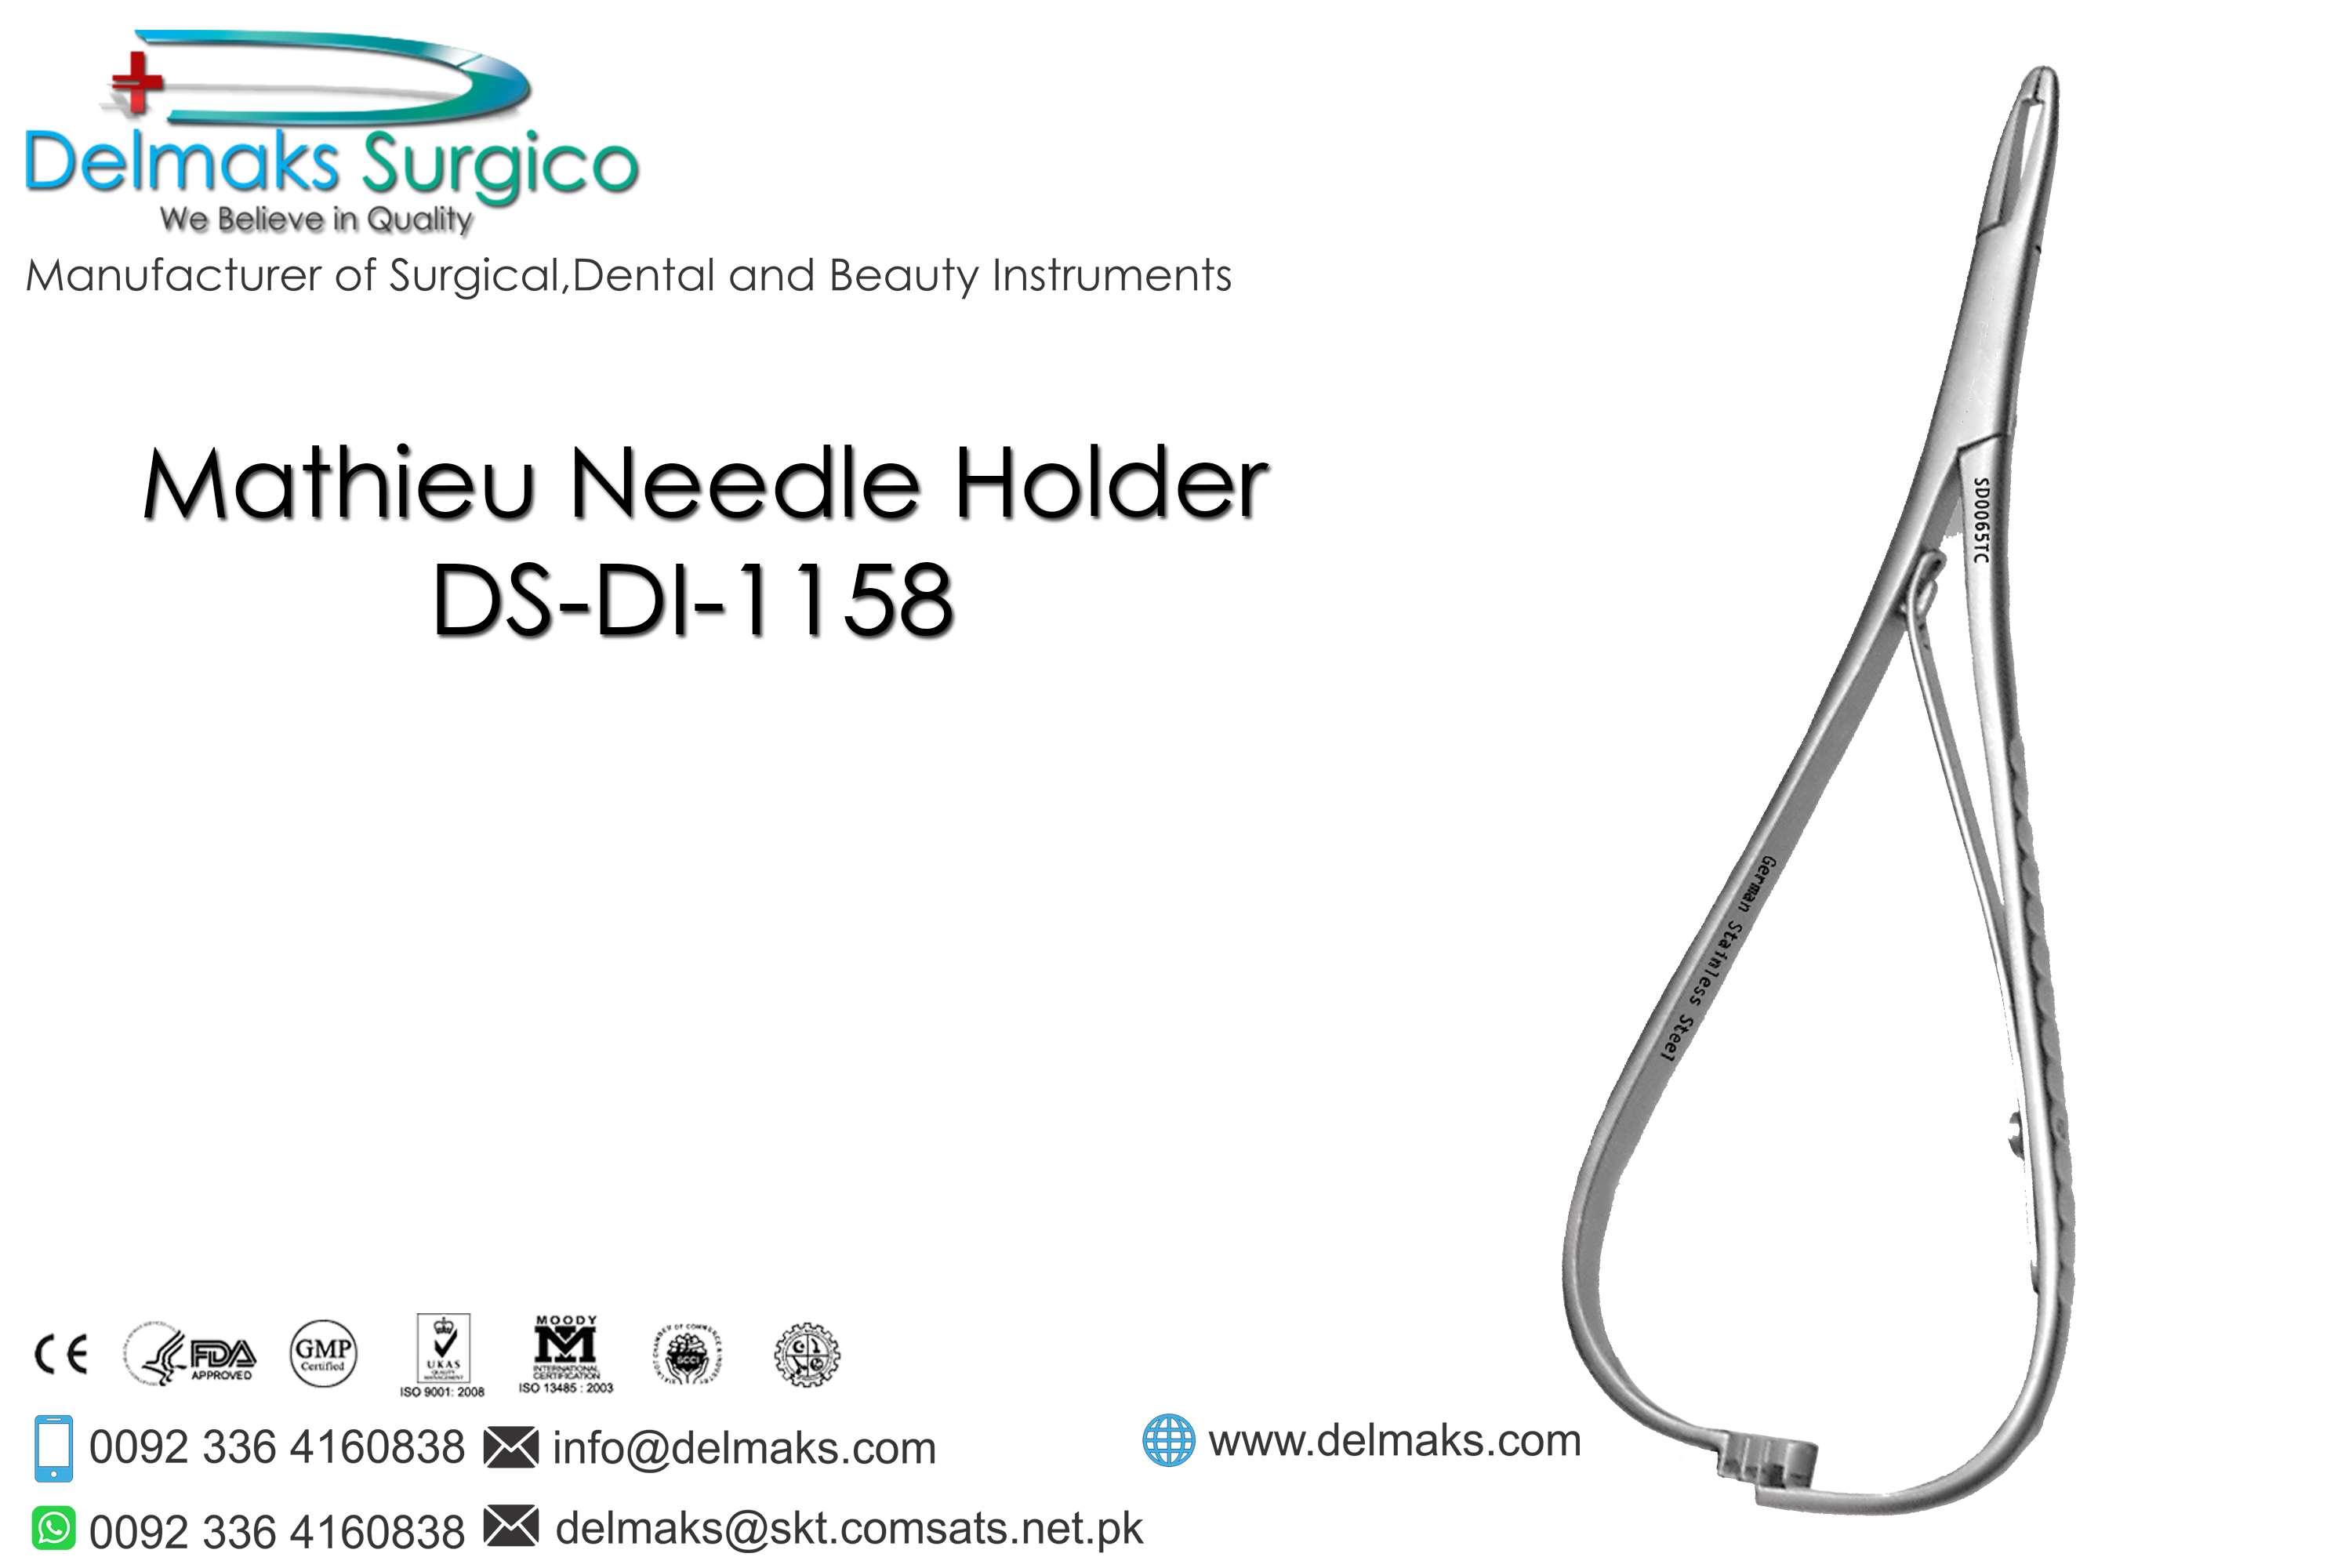 Castroviejo Needle Holder-Needle Holders-Dental Instruments-Delmaks Surgico